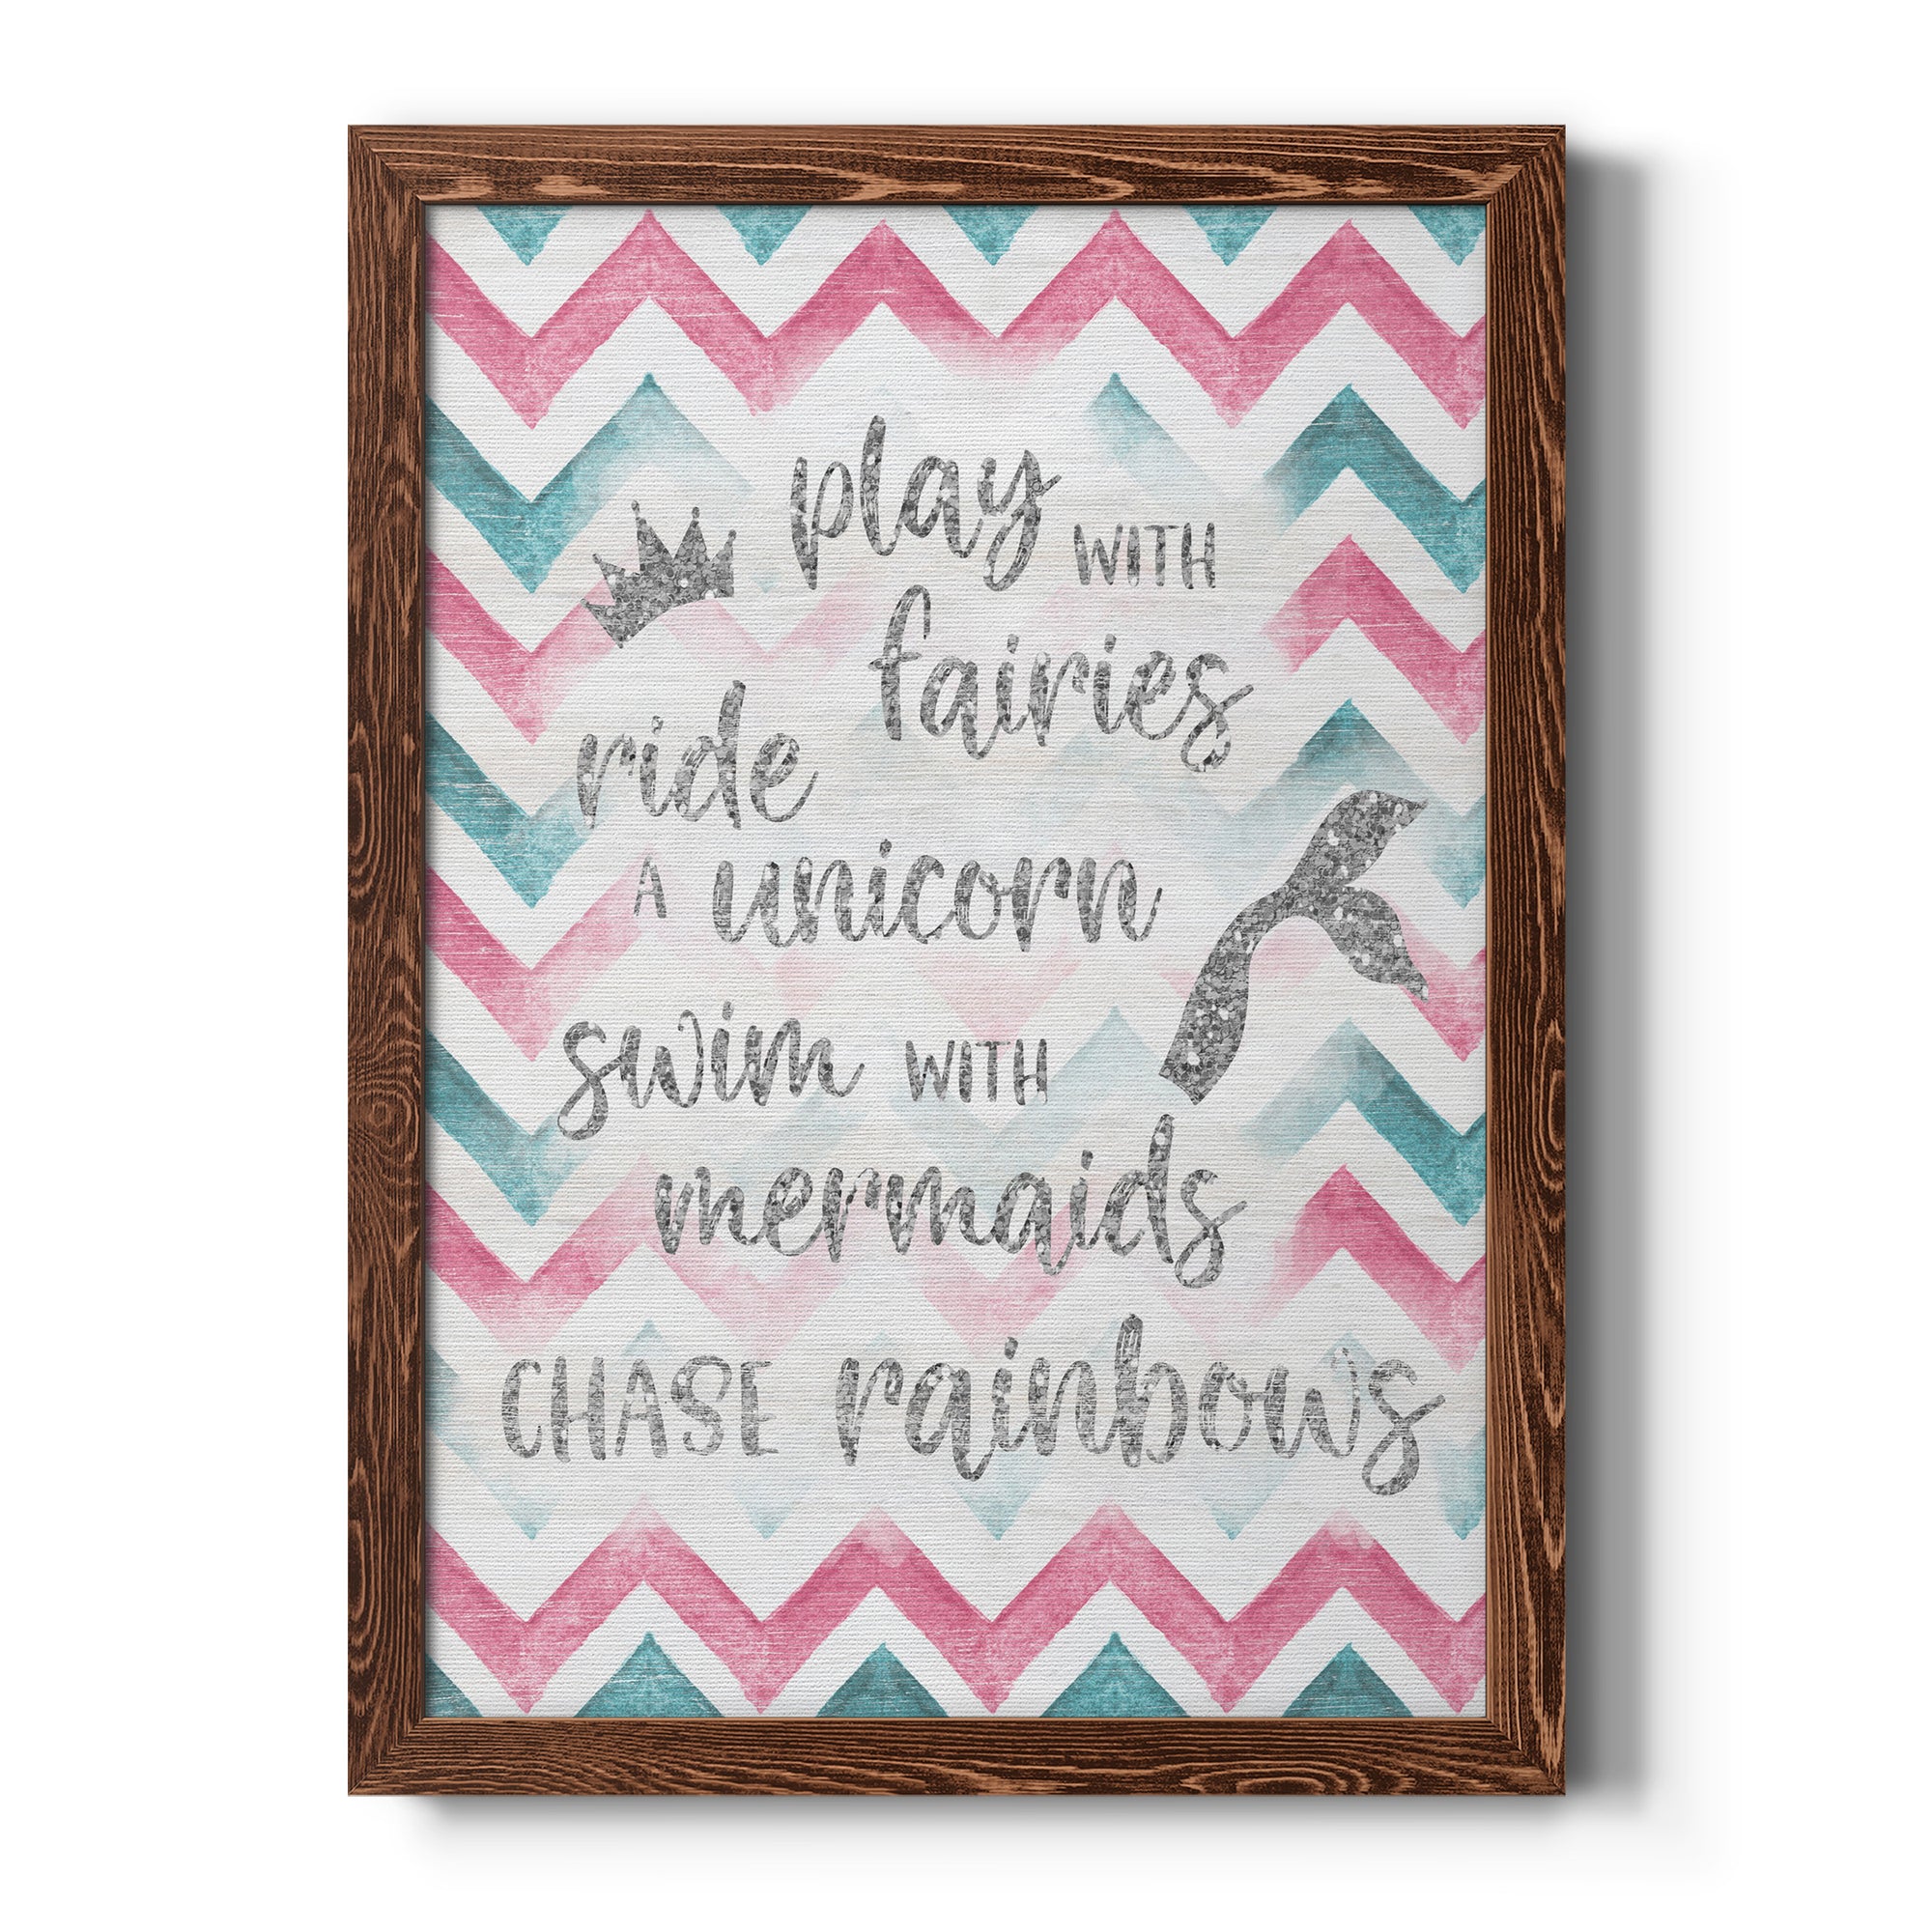 Fairies Unicorns Mermaids - Premium Canvas Framed in Barnwood - Ready to Hang